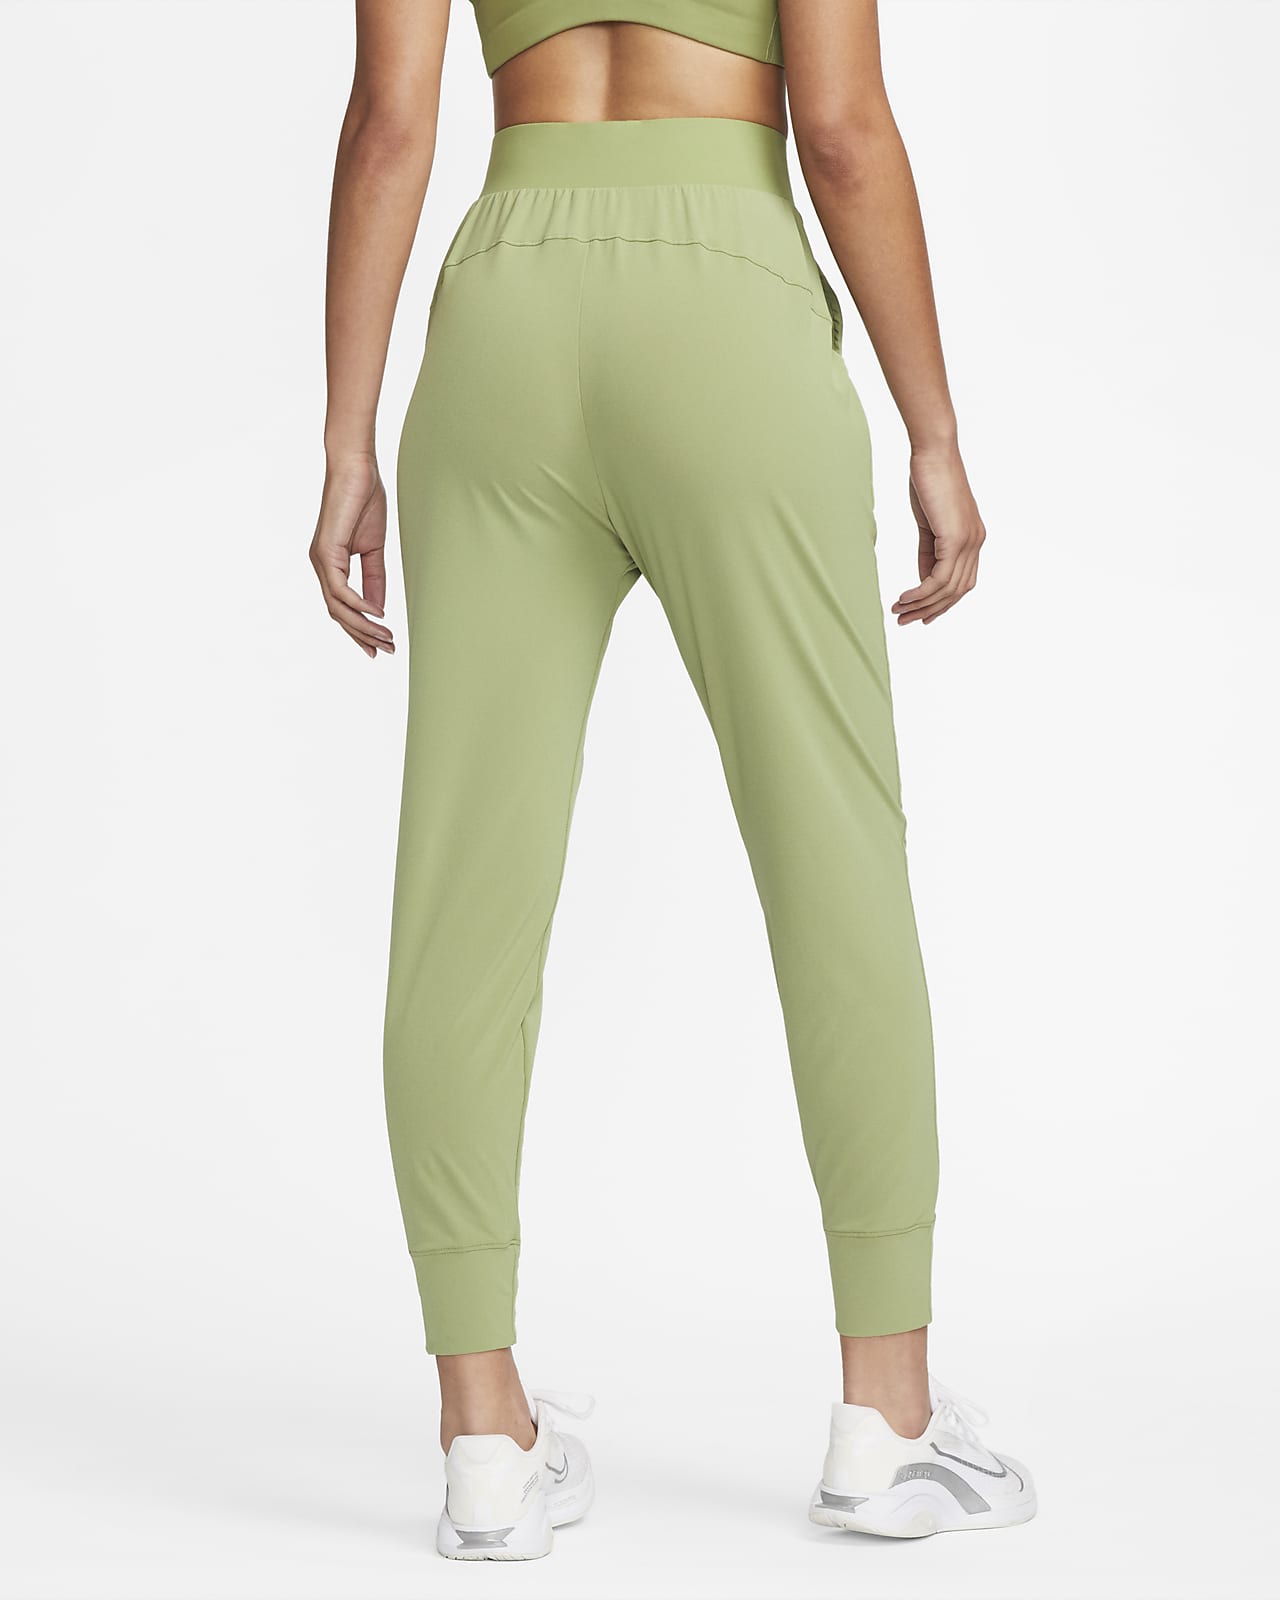 Pantalones de entrenamiento para mujer Nike Nike.com